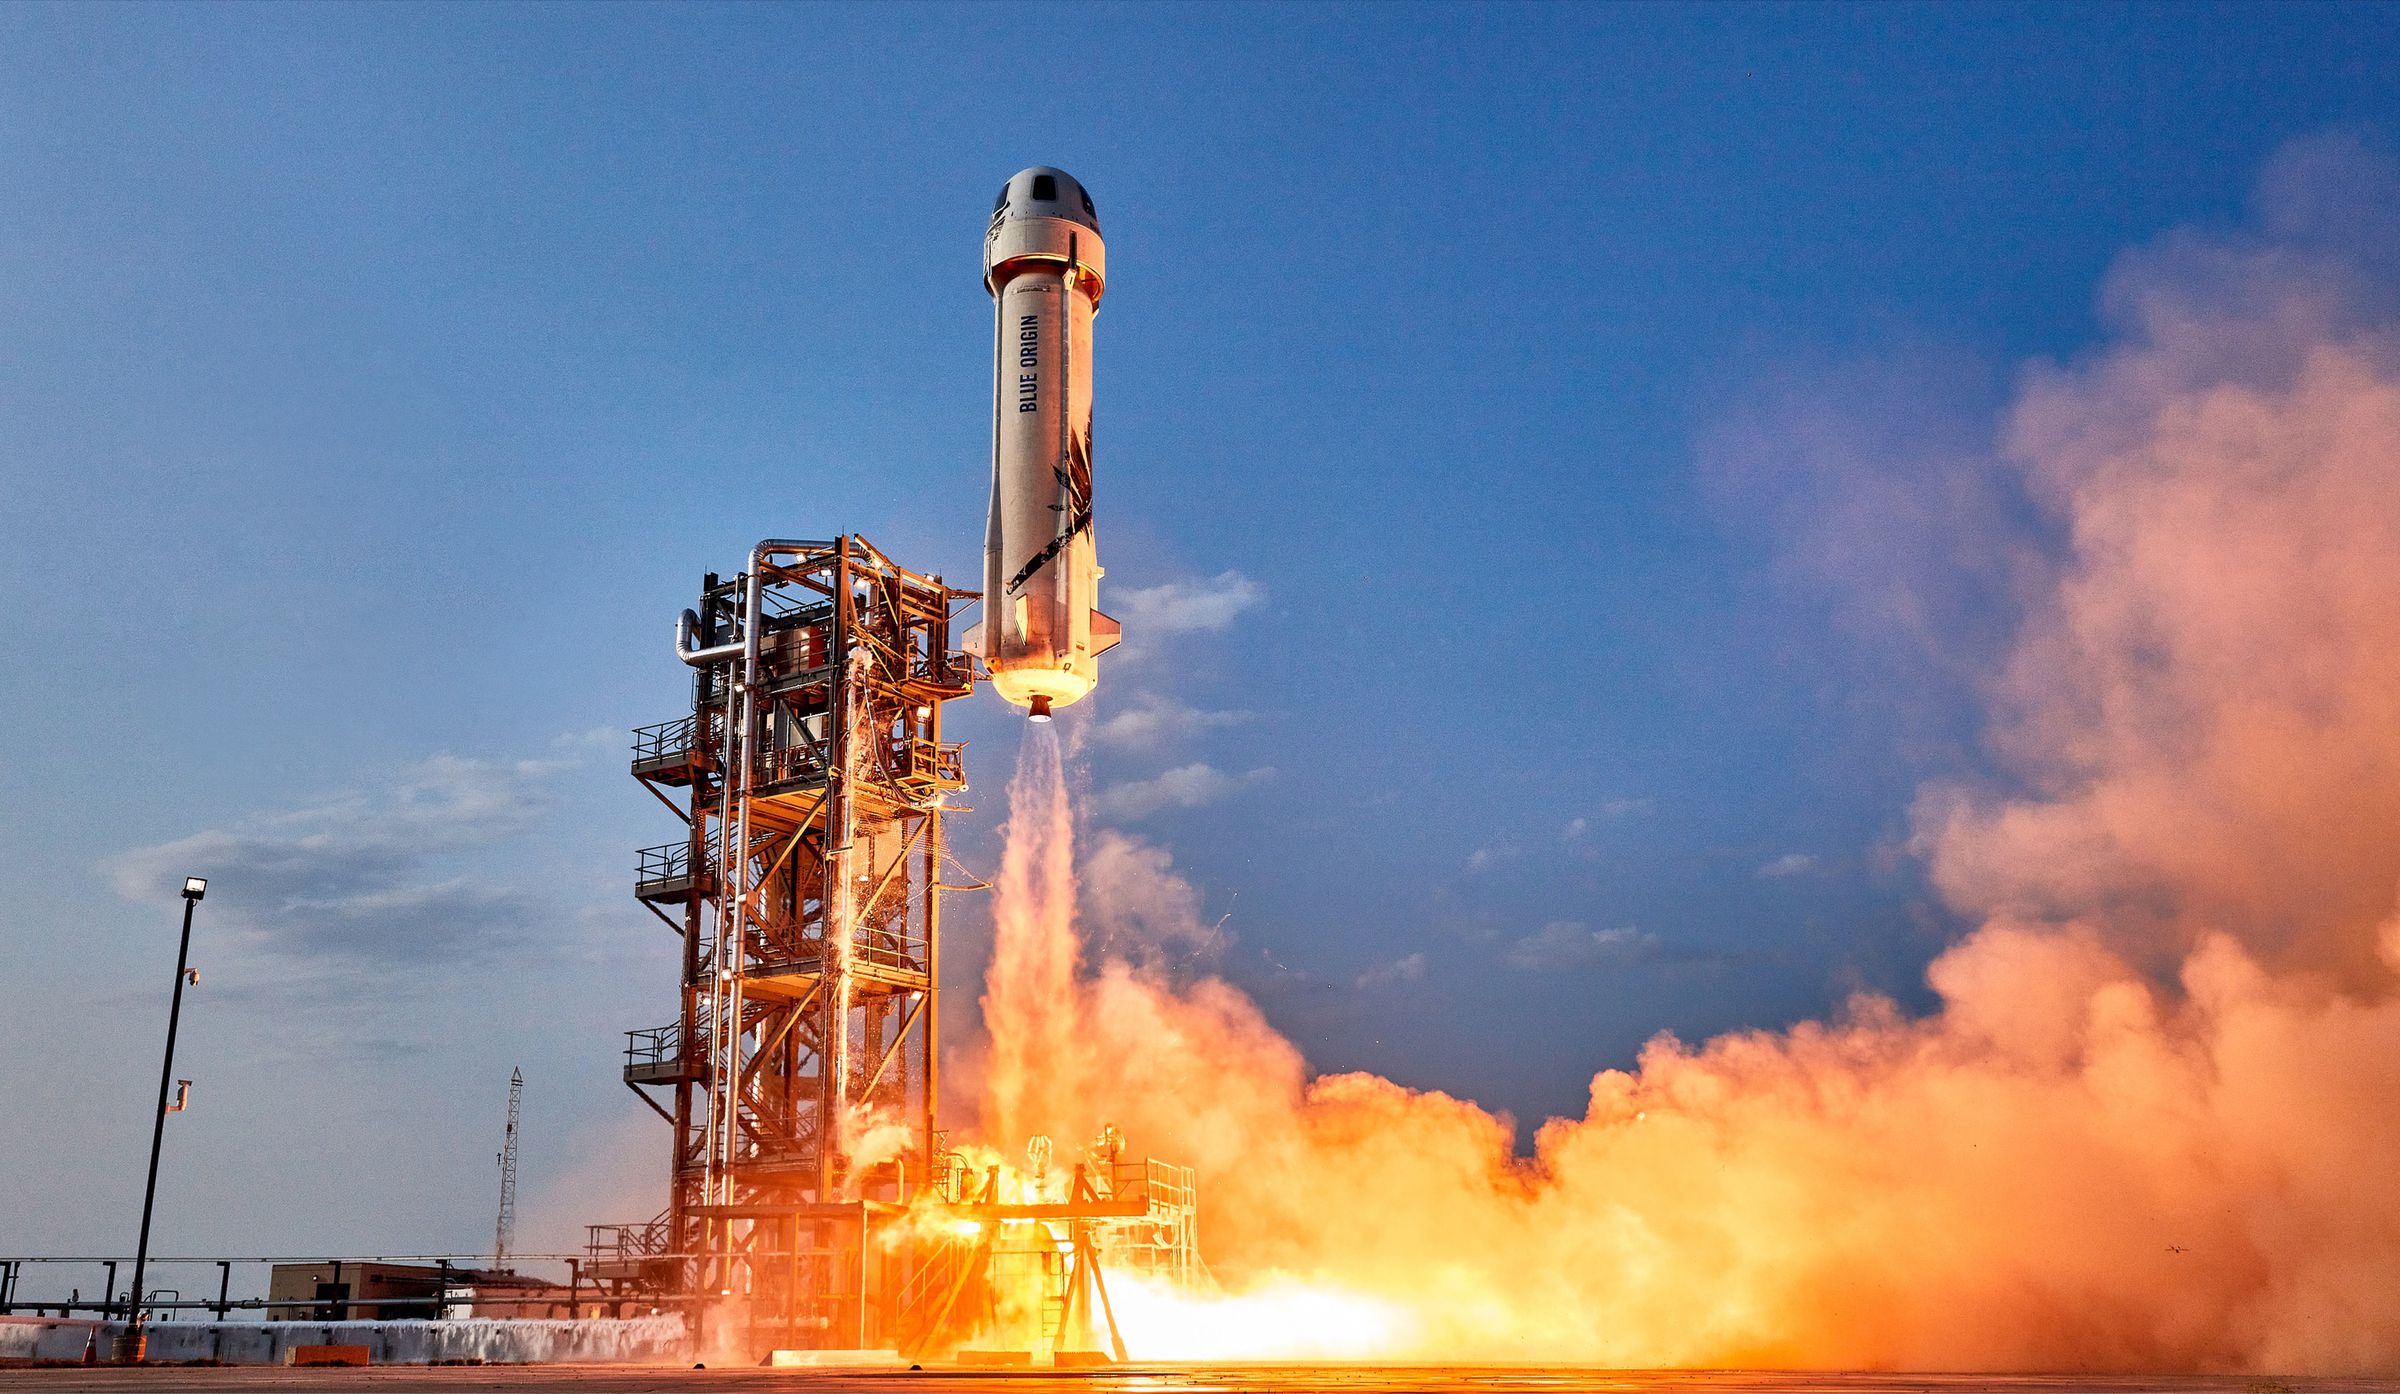 Blue Origin’s New Shepard rocket, carrying Jeff Bezos to space